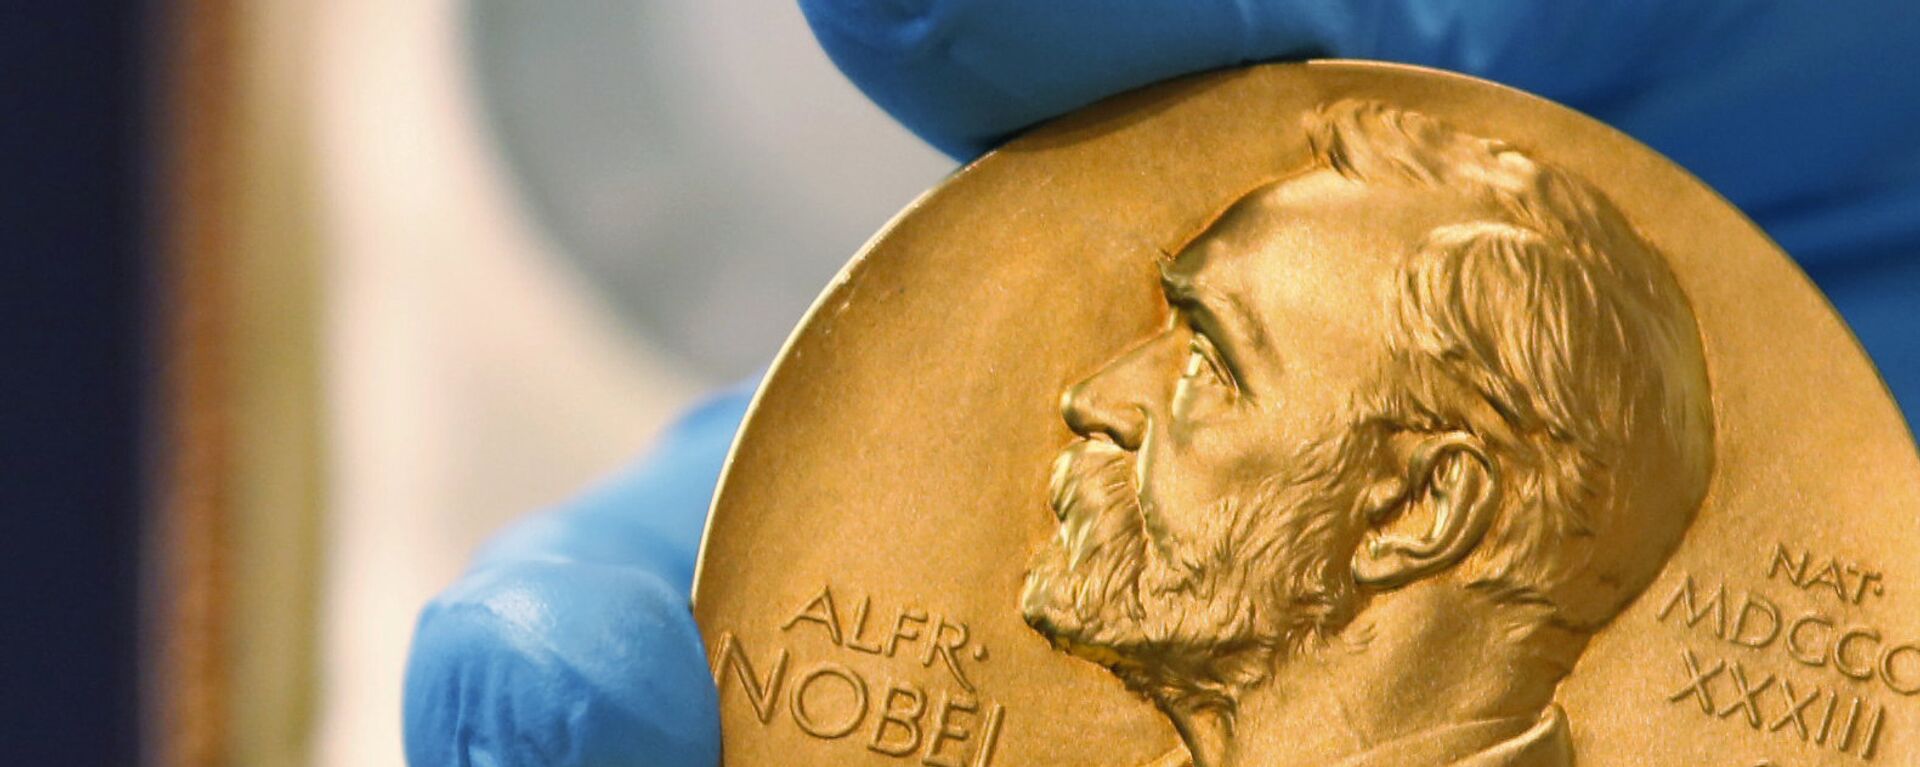 نوبل - سبوتنيك عربي, 1920, 10.06.2021